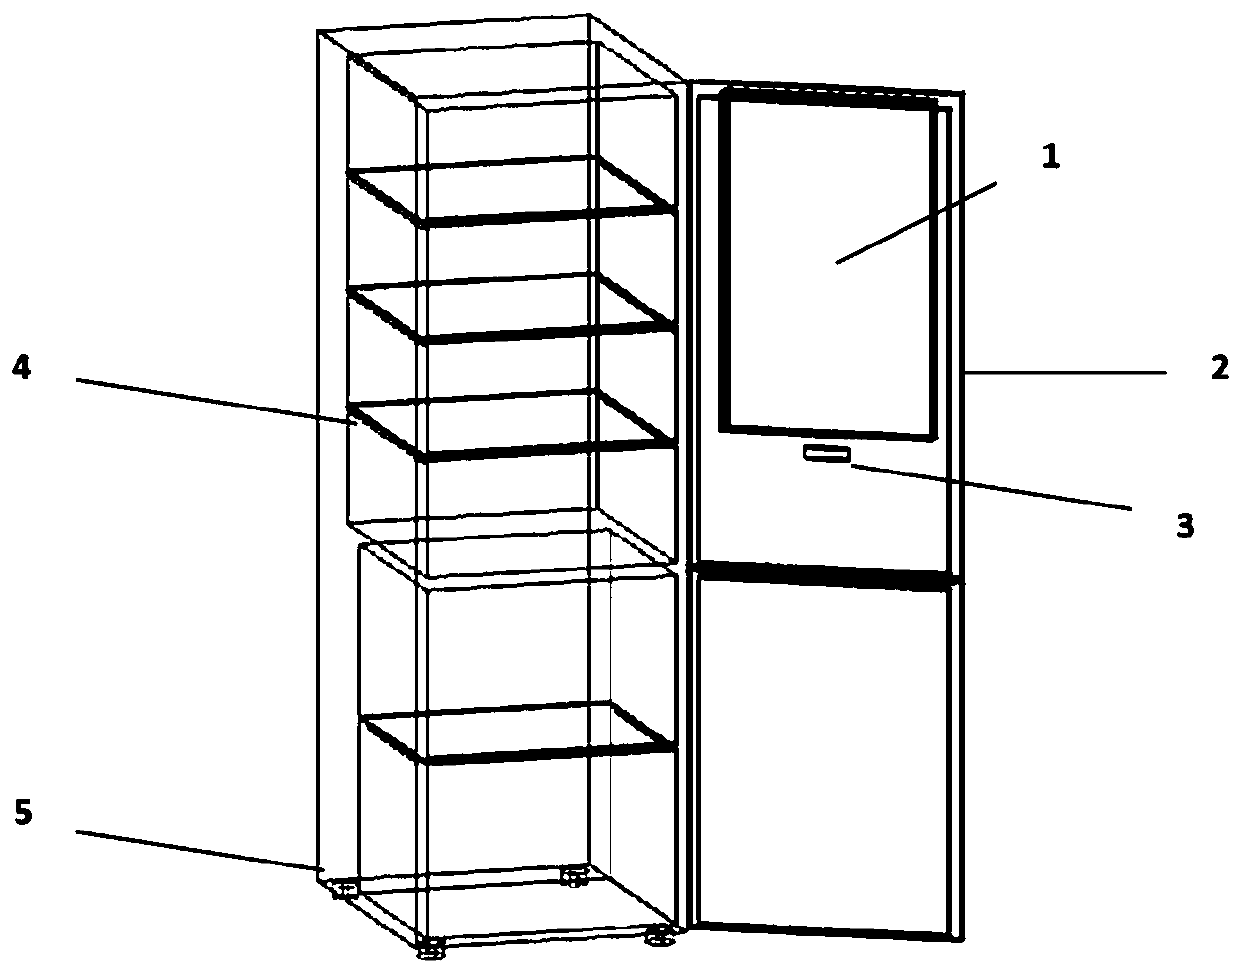 Intelligent refrigerator with shelf life reminding function